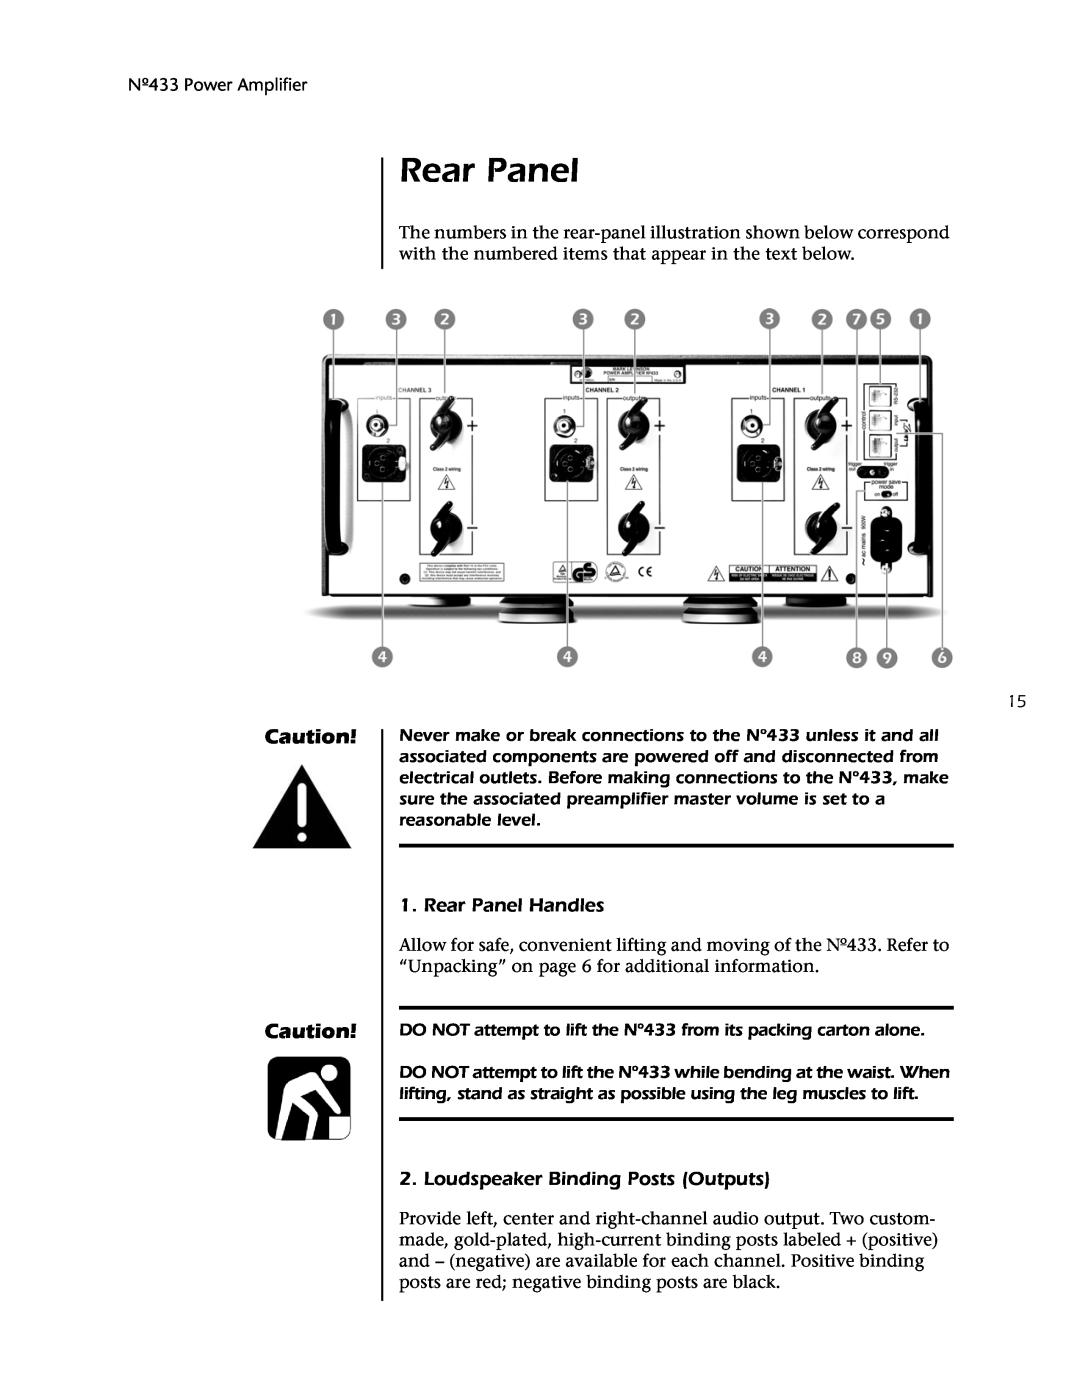 Mark Levinson 433 owner manual Rear Panel Handles, Loudspeaker Binding Posts Outputs 